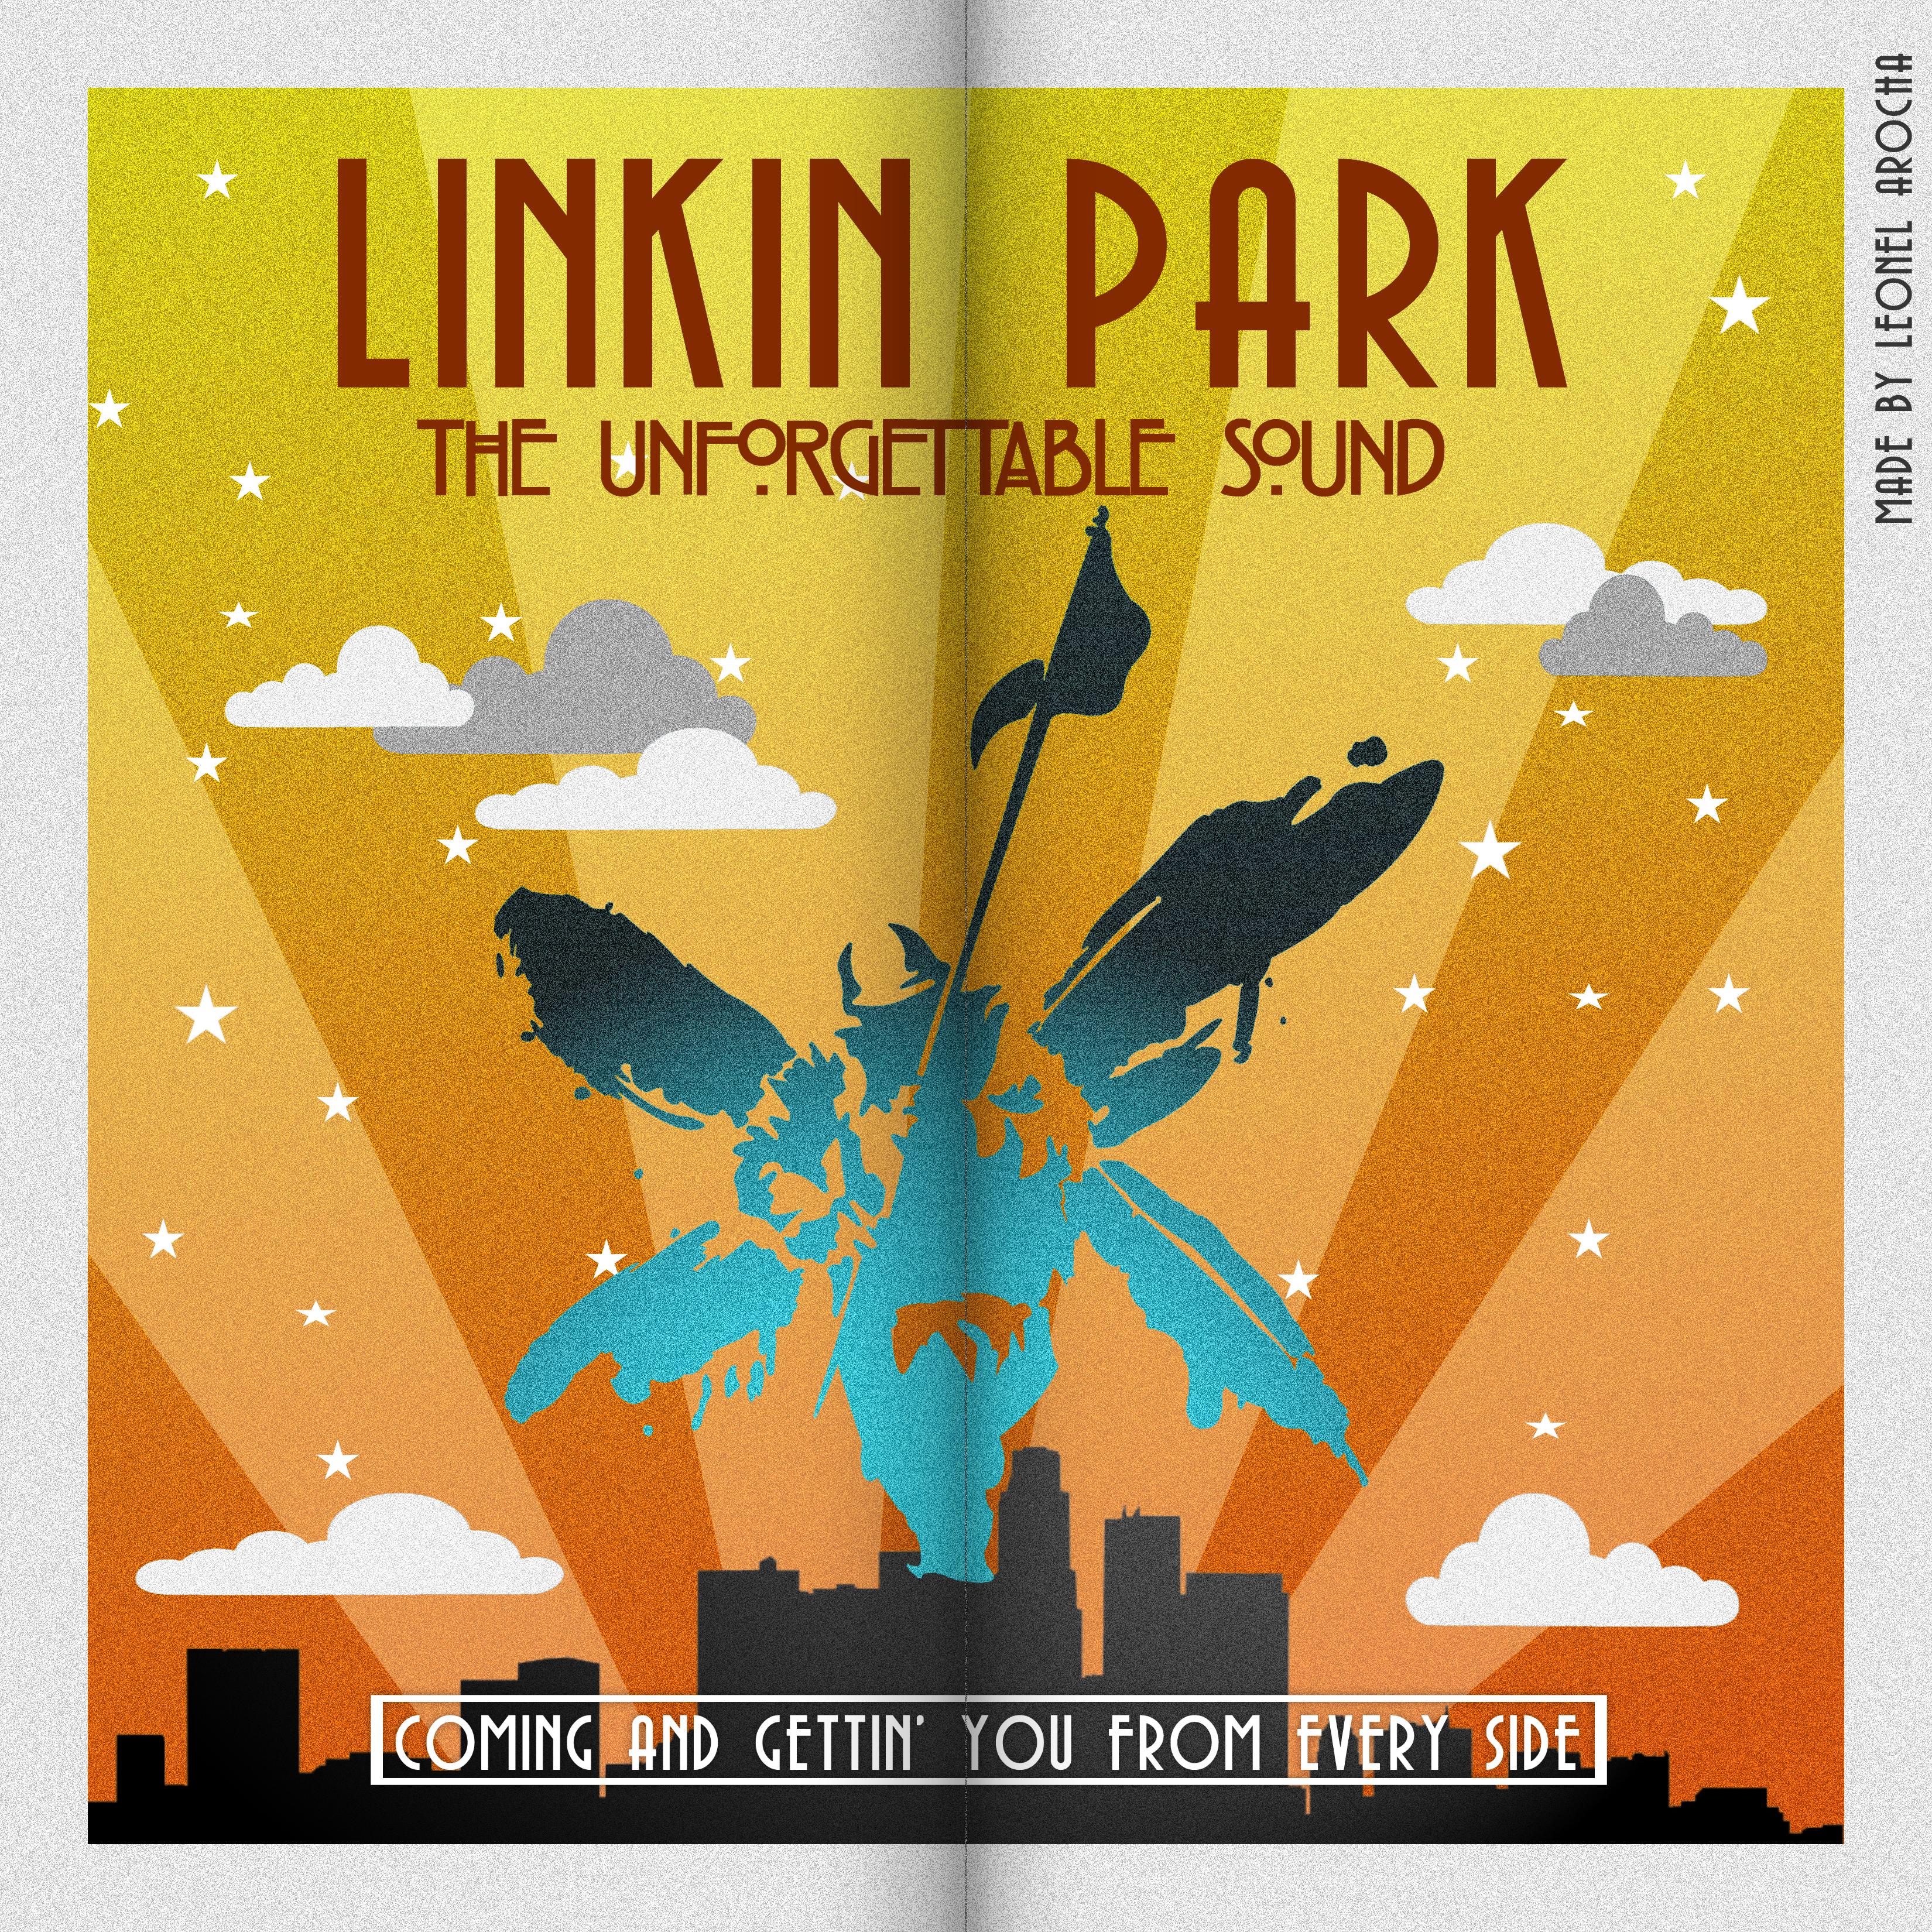 linkin_park_album_cover__art_deco_style_